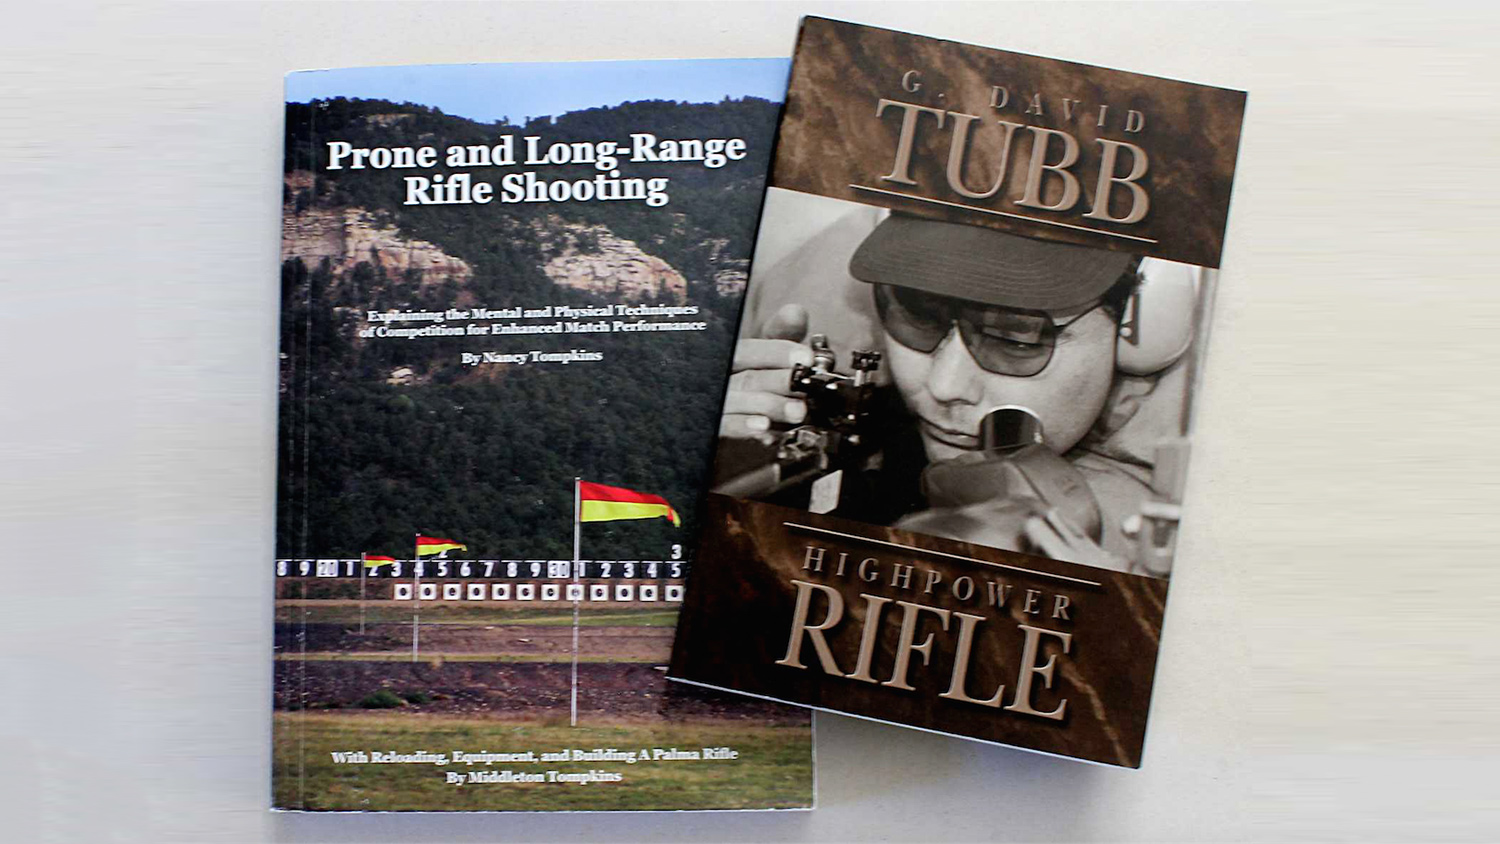 Nancy Tompkins&#x27; and David Tubb&#x27;s high power rifle books